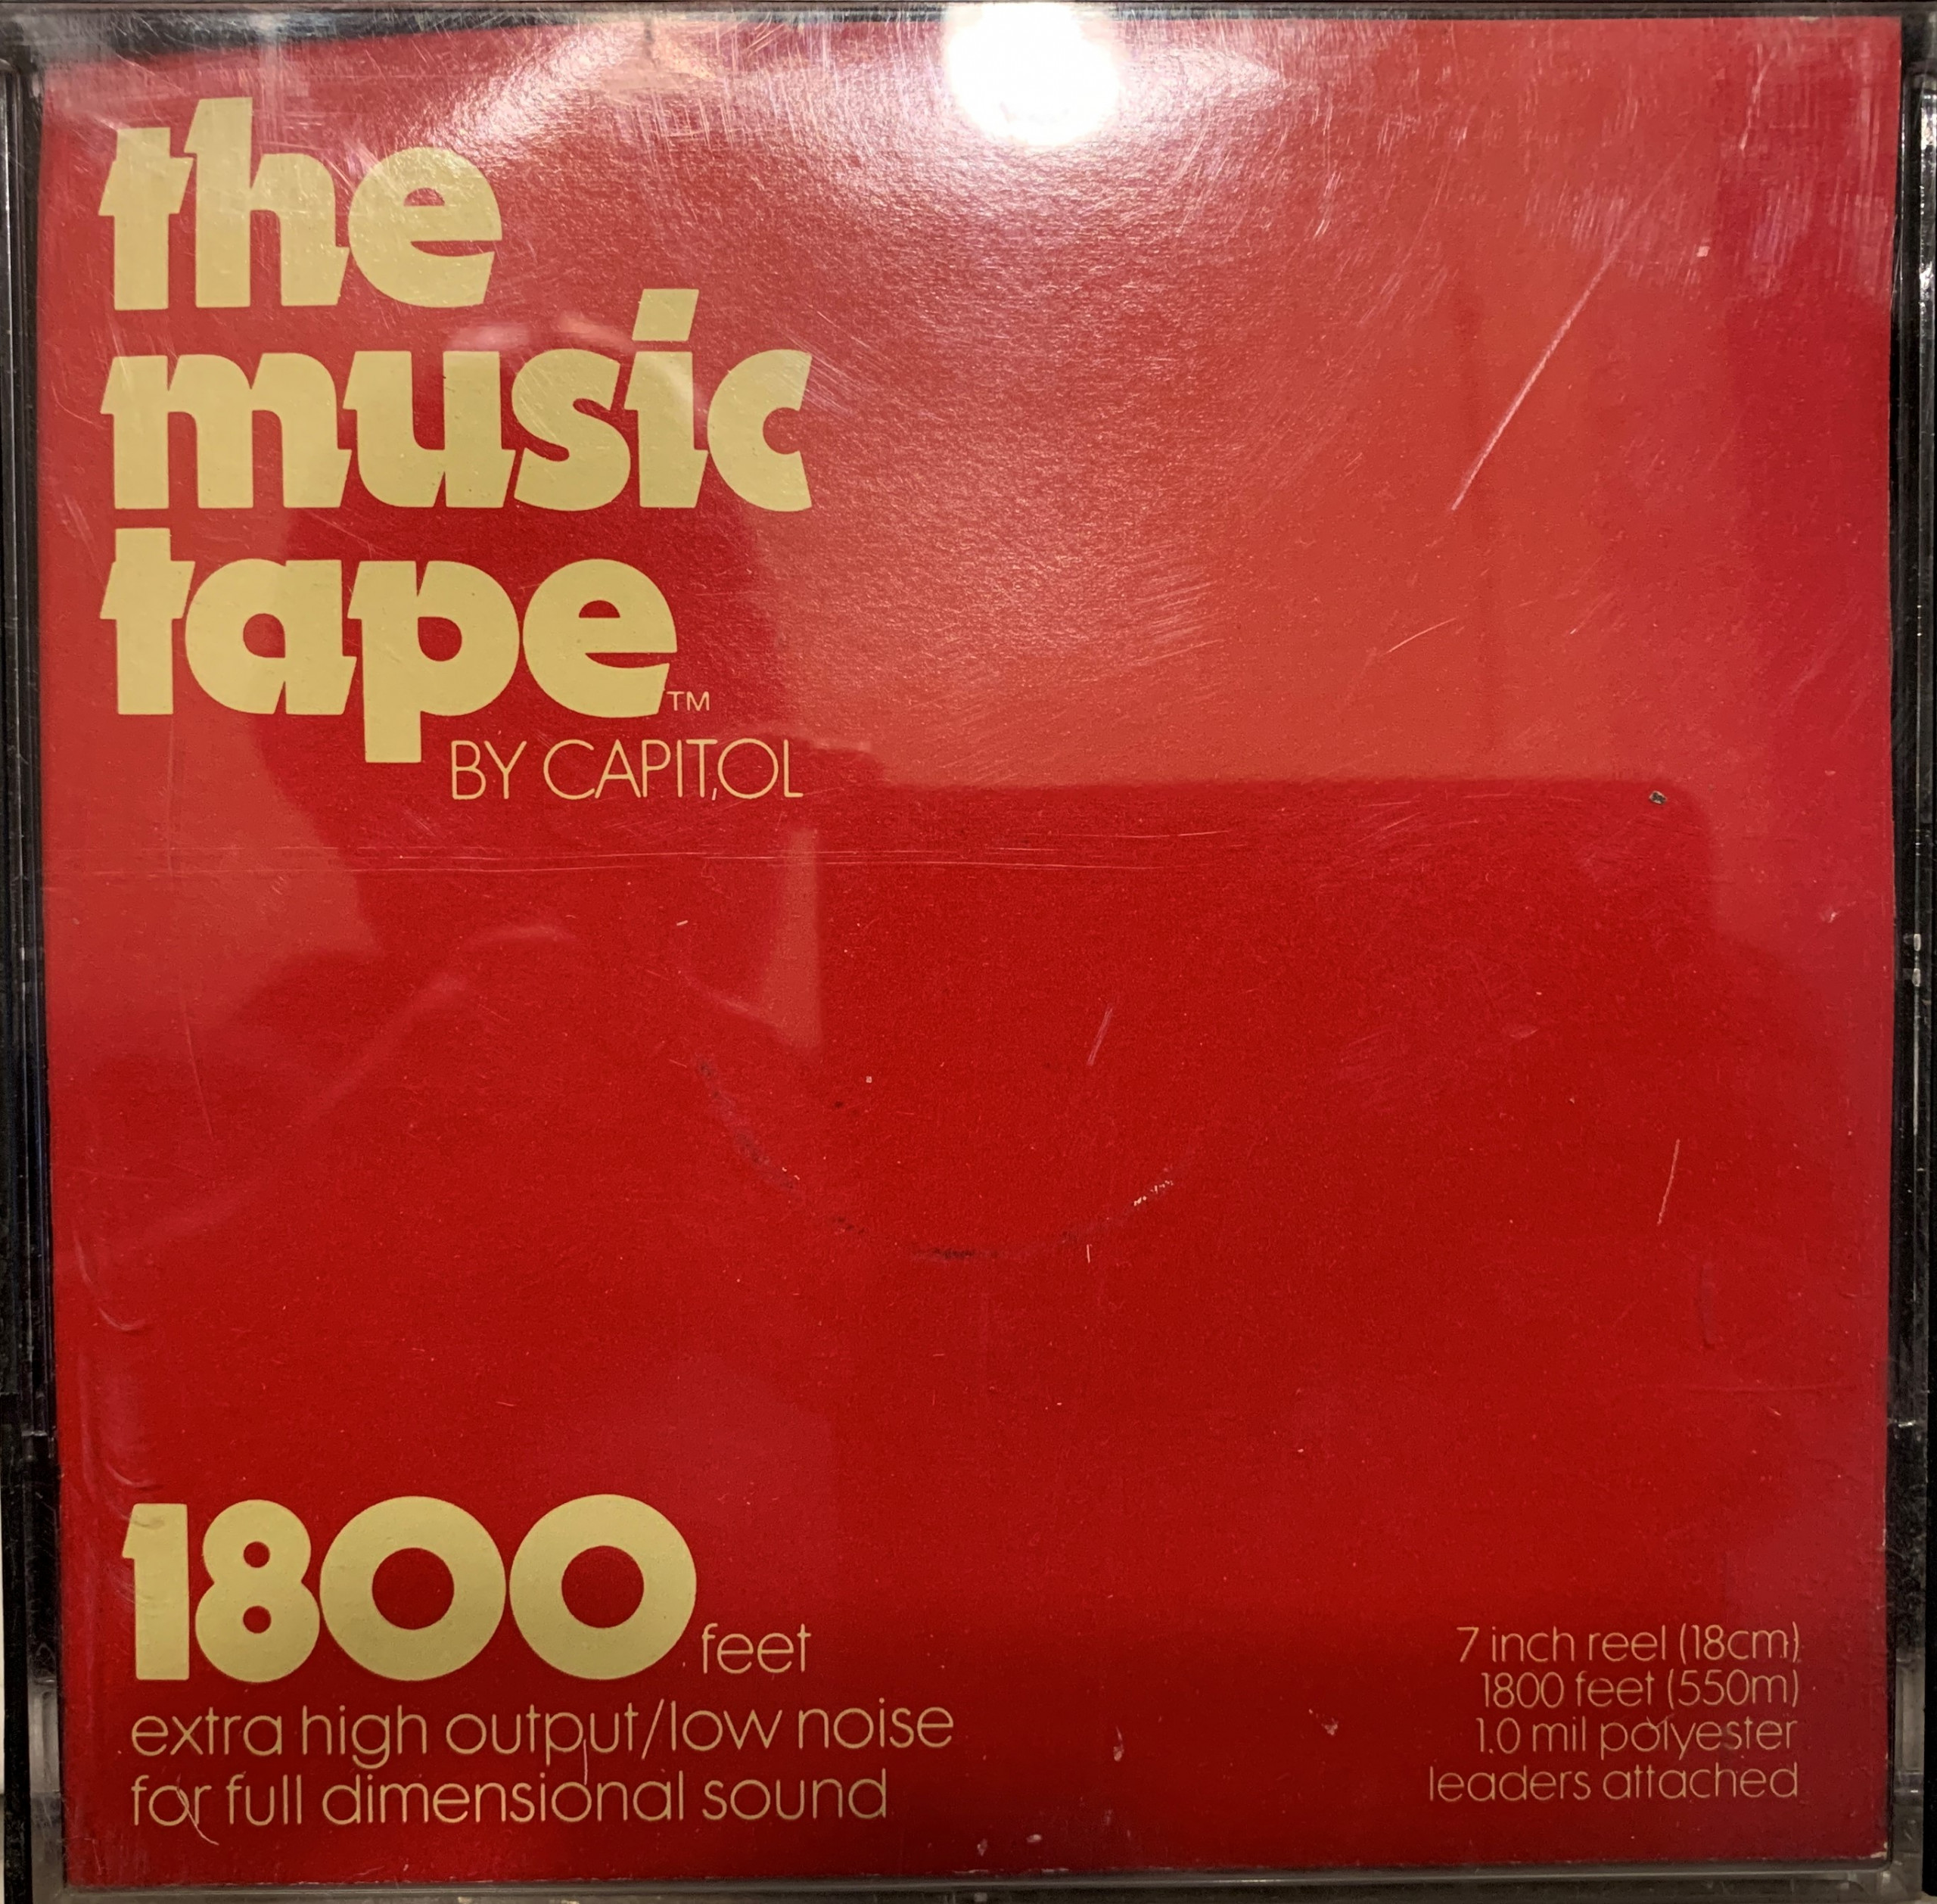 https://reeltoreelwarehouse.com/wp-content/uploads/2021/09/Capitol-Audiotape-The-Music-Tape-FDS-7in-1800ft-Reel-Tape-Box-scaled.jpg